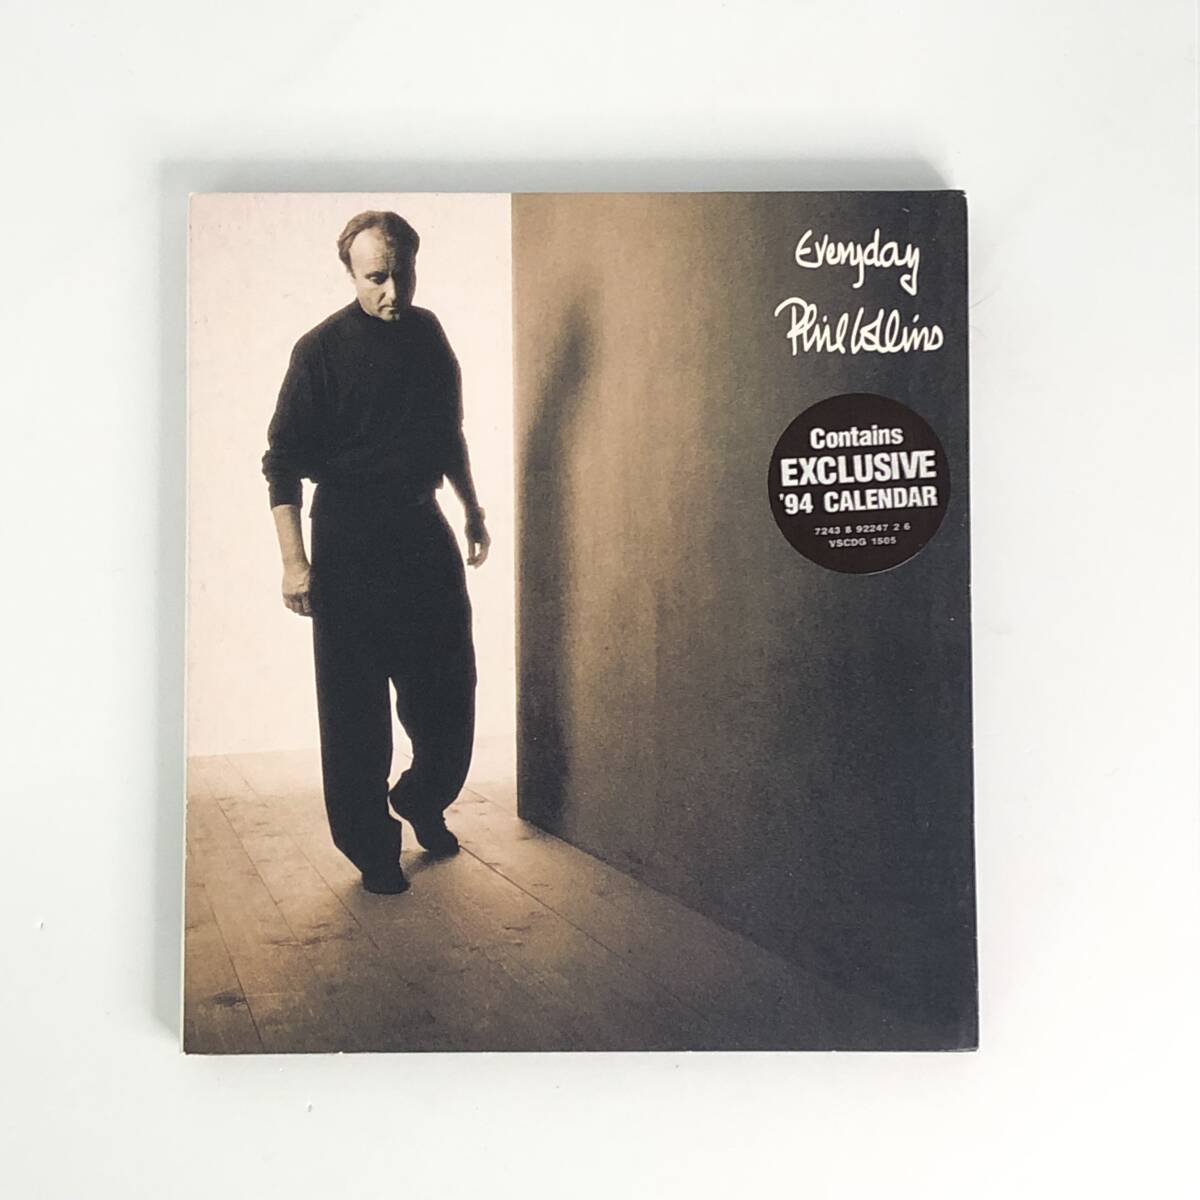 UK盤 中古CD カレンダー付き Phil Collins Everyday フィル・コリンズ エヴリデイ Virgin VSCDG1505 個人所有 B_画像1